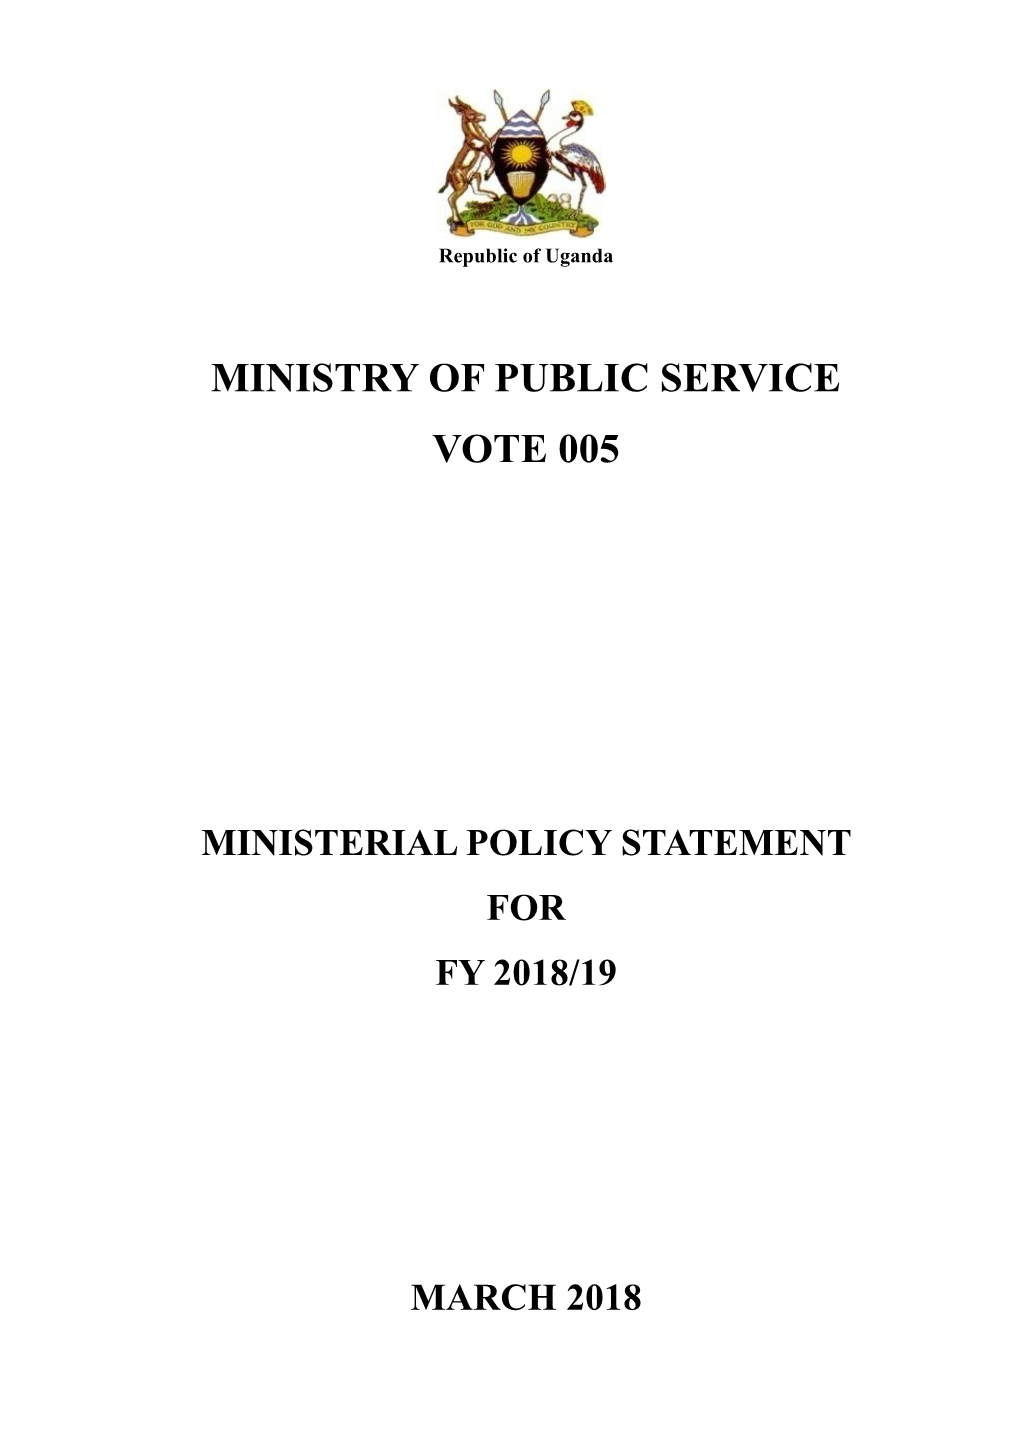 Ministry of Public Service Vote 005